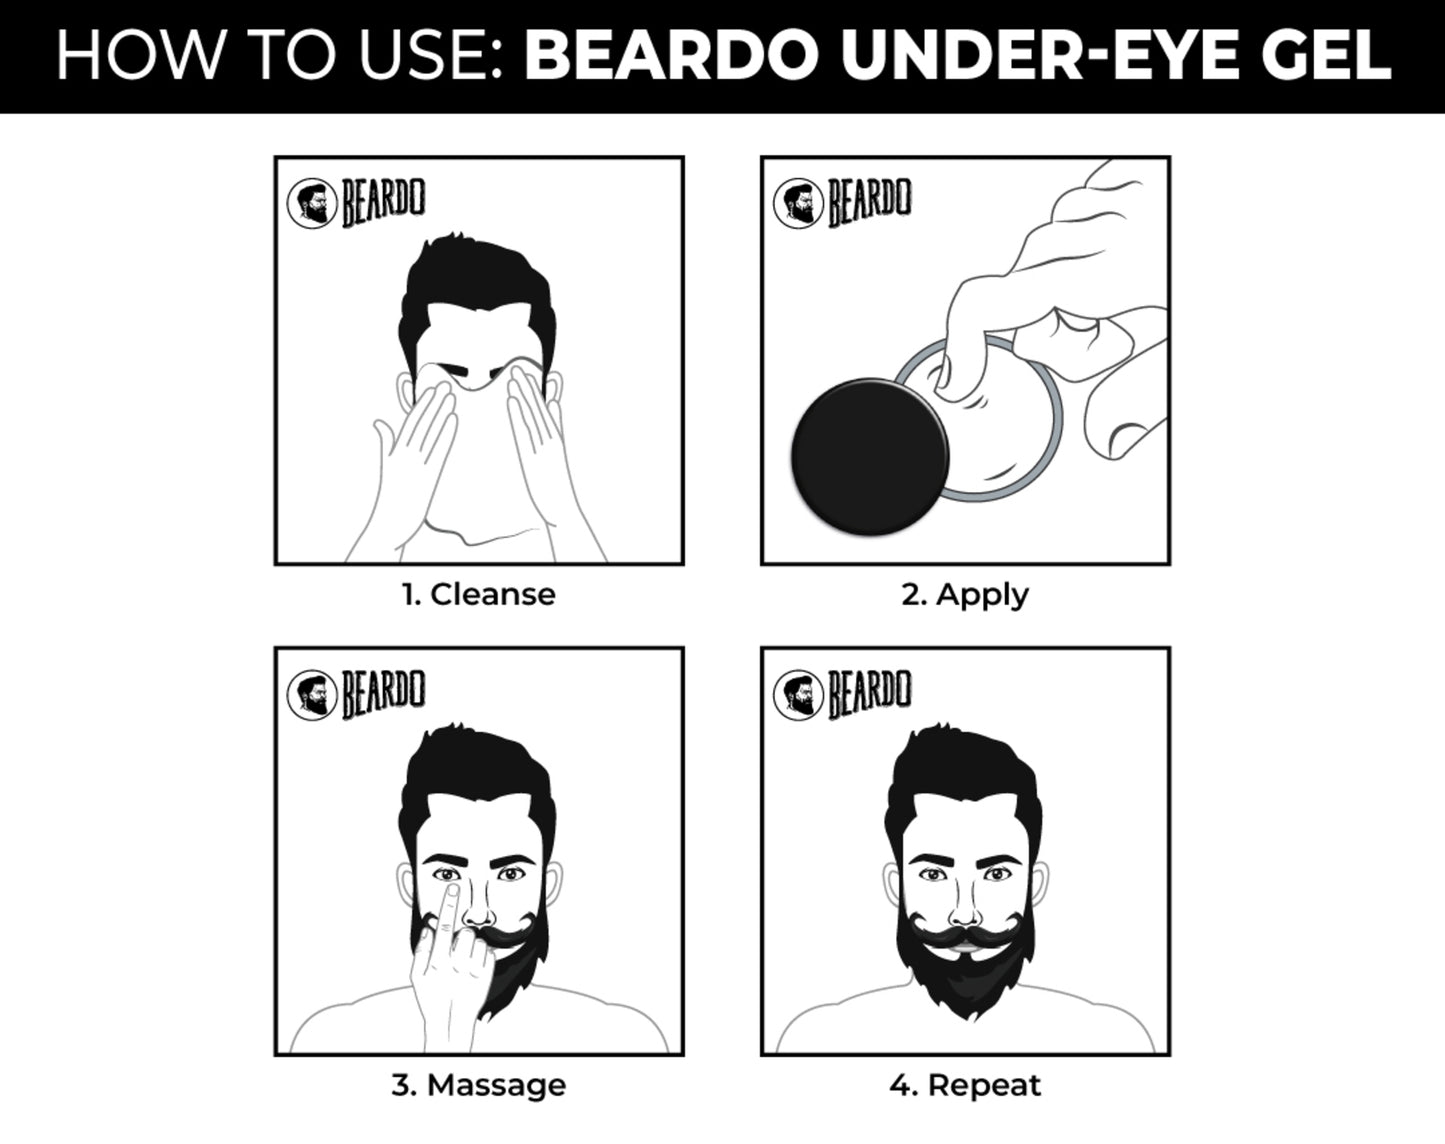 best eye gel for men, under eye gel beardo, beardo under eye gel prrice, best under eye gel, how to use under eye gel, how to use beardo under eye gel